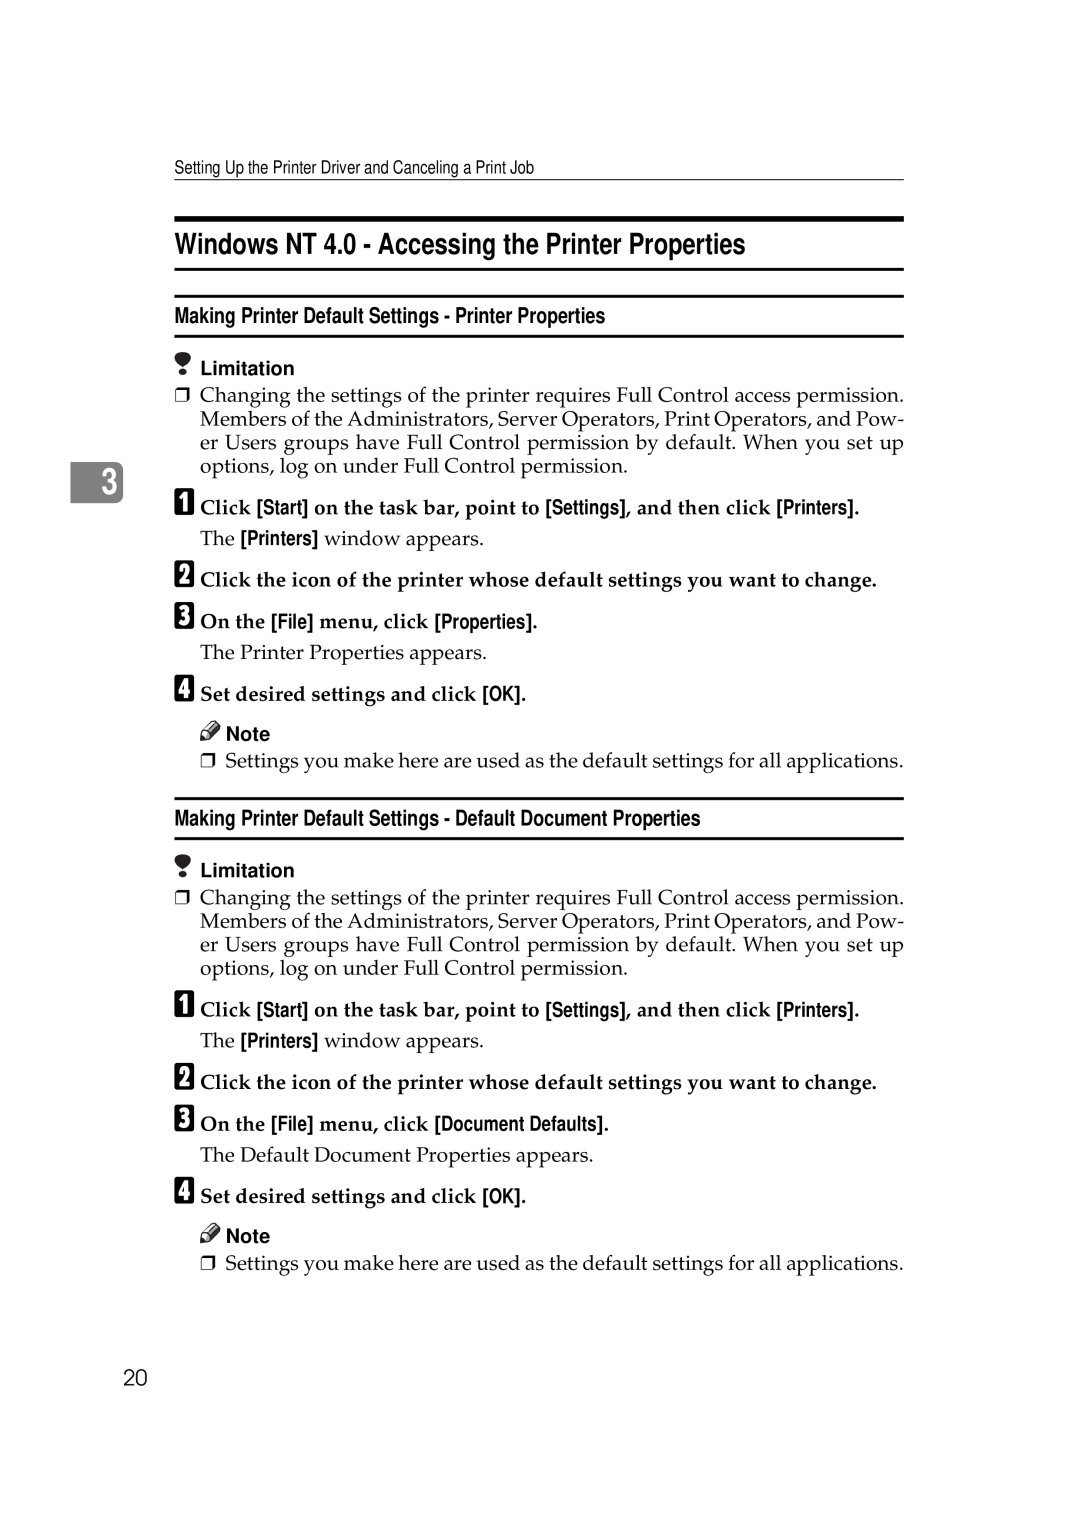 Ricoh Aficio AP2700 operating instructions Windows NT 4.0 - Accessing the Printer Properties 